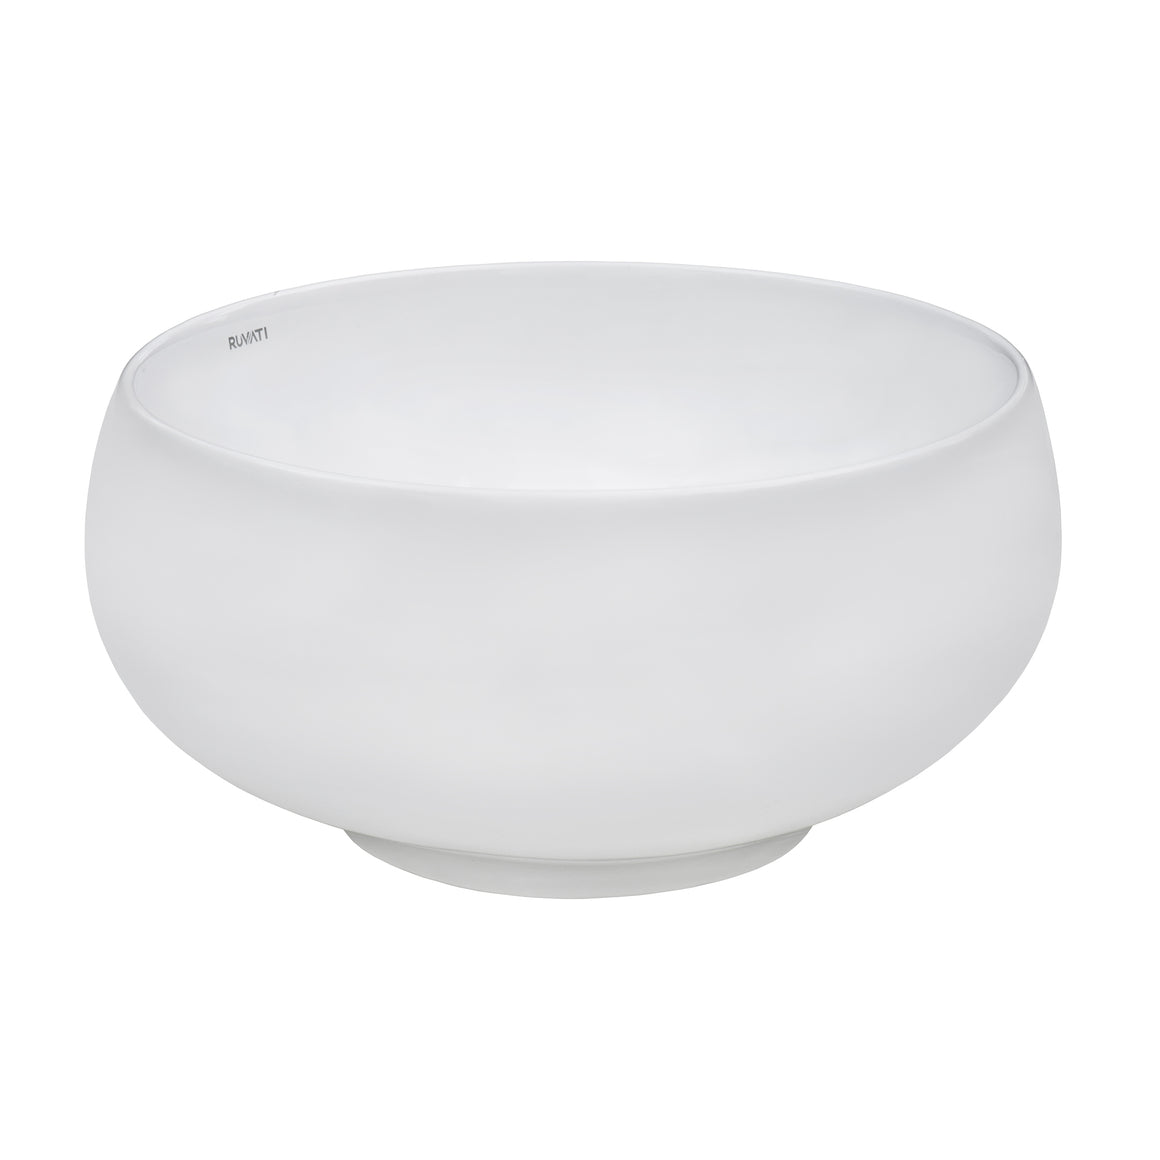 Ruvati 12 inch Bathroom Vessel Sink Round White Circular Above Counter Porcelain Ceramic